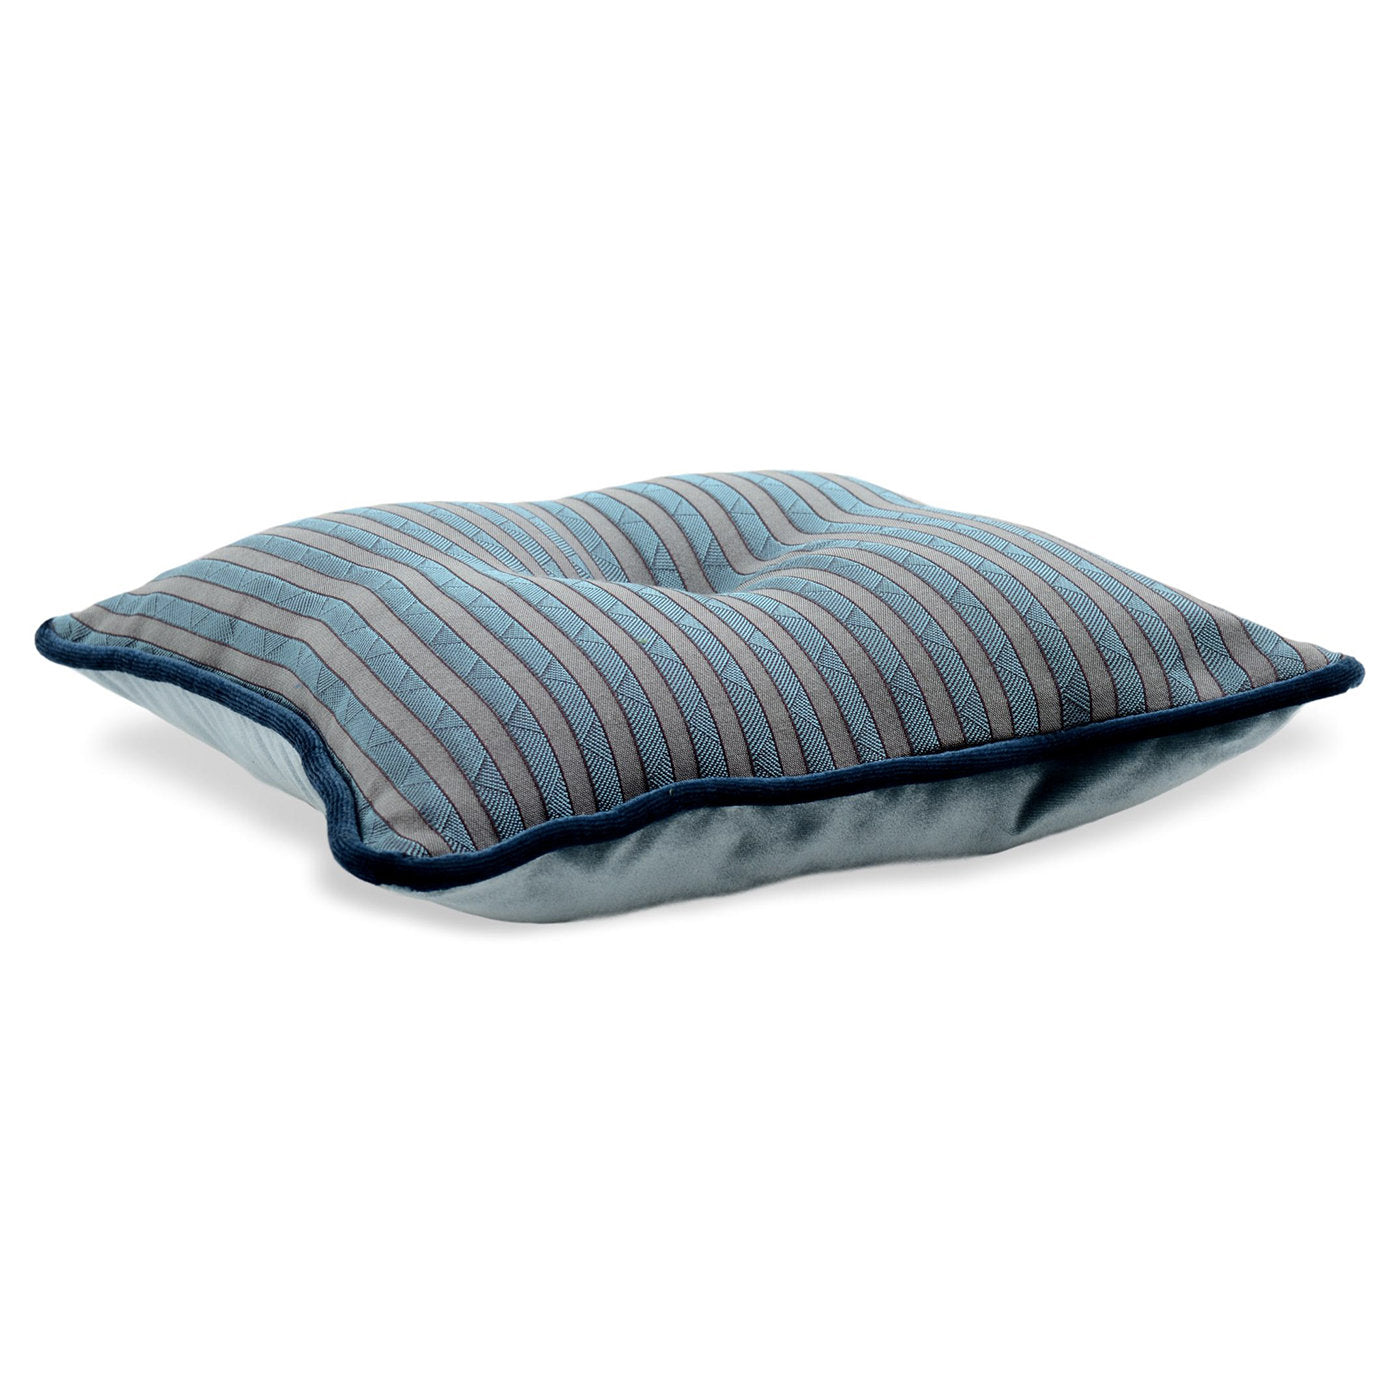 Blue-Grey Carré Cushion in striped jacquard fabric - Alternative view 2